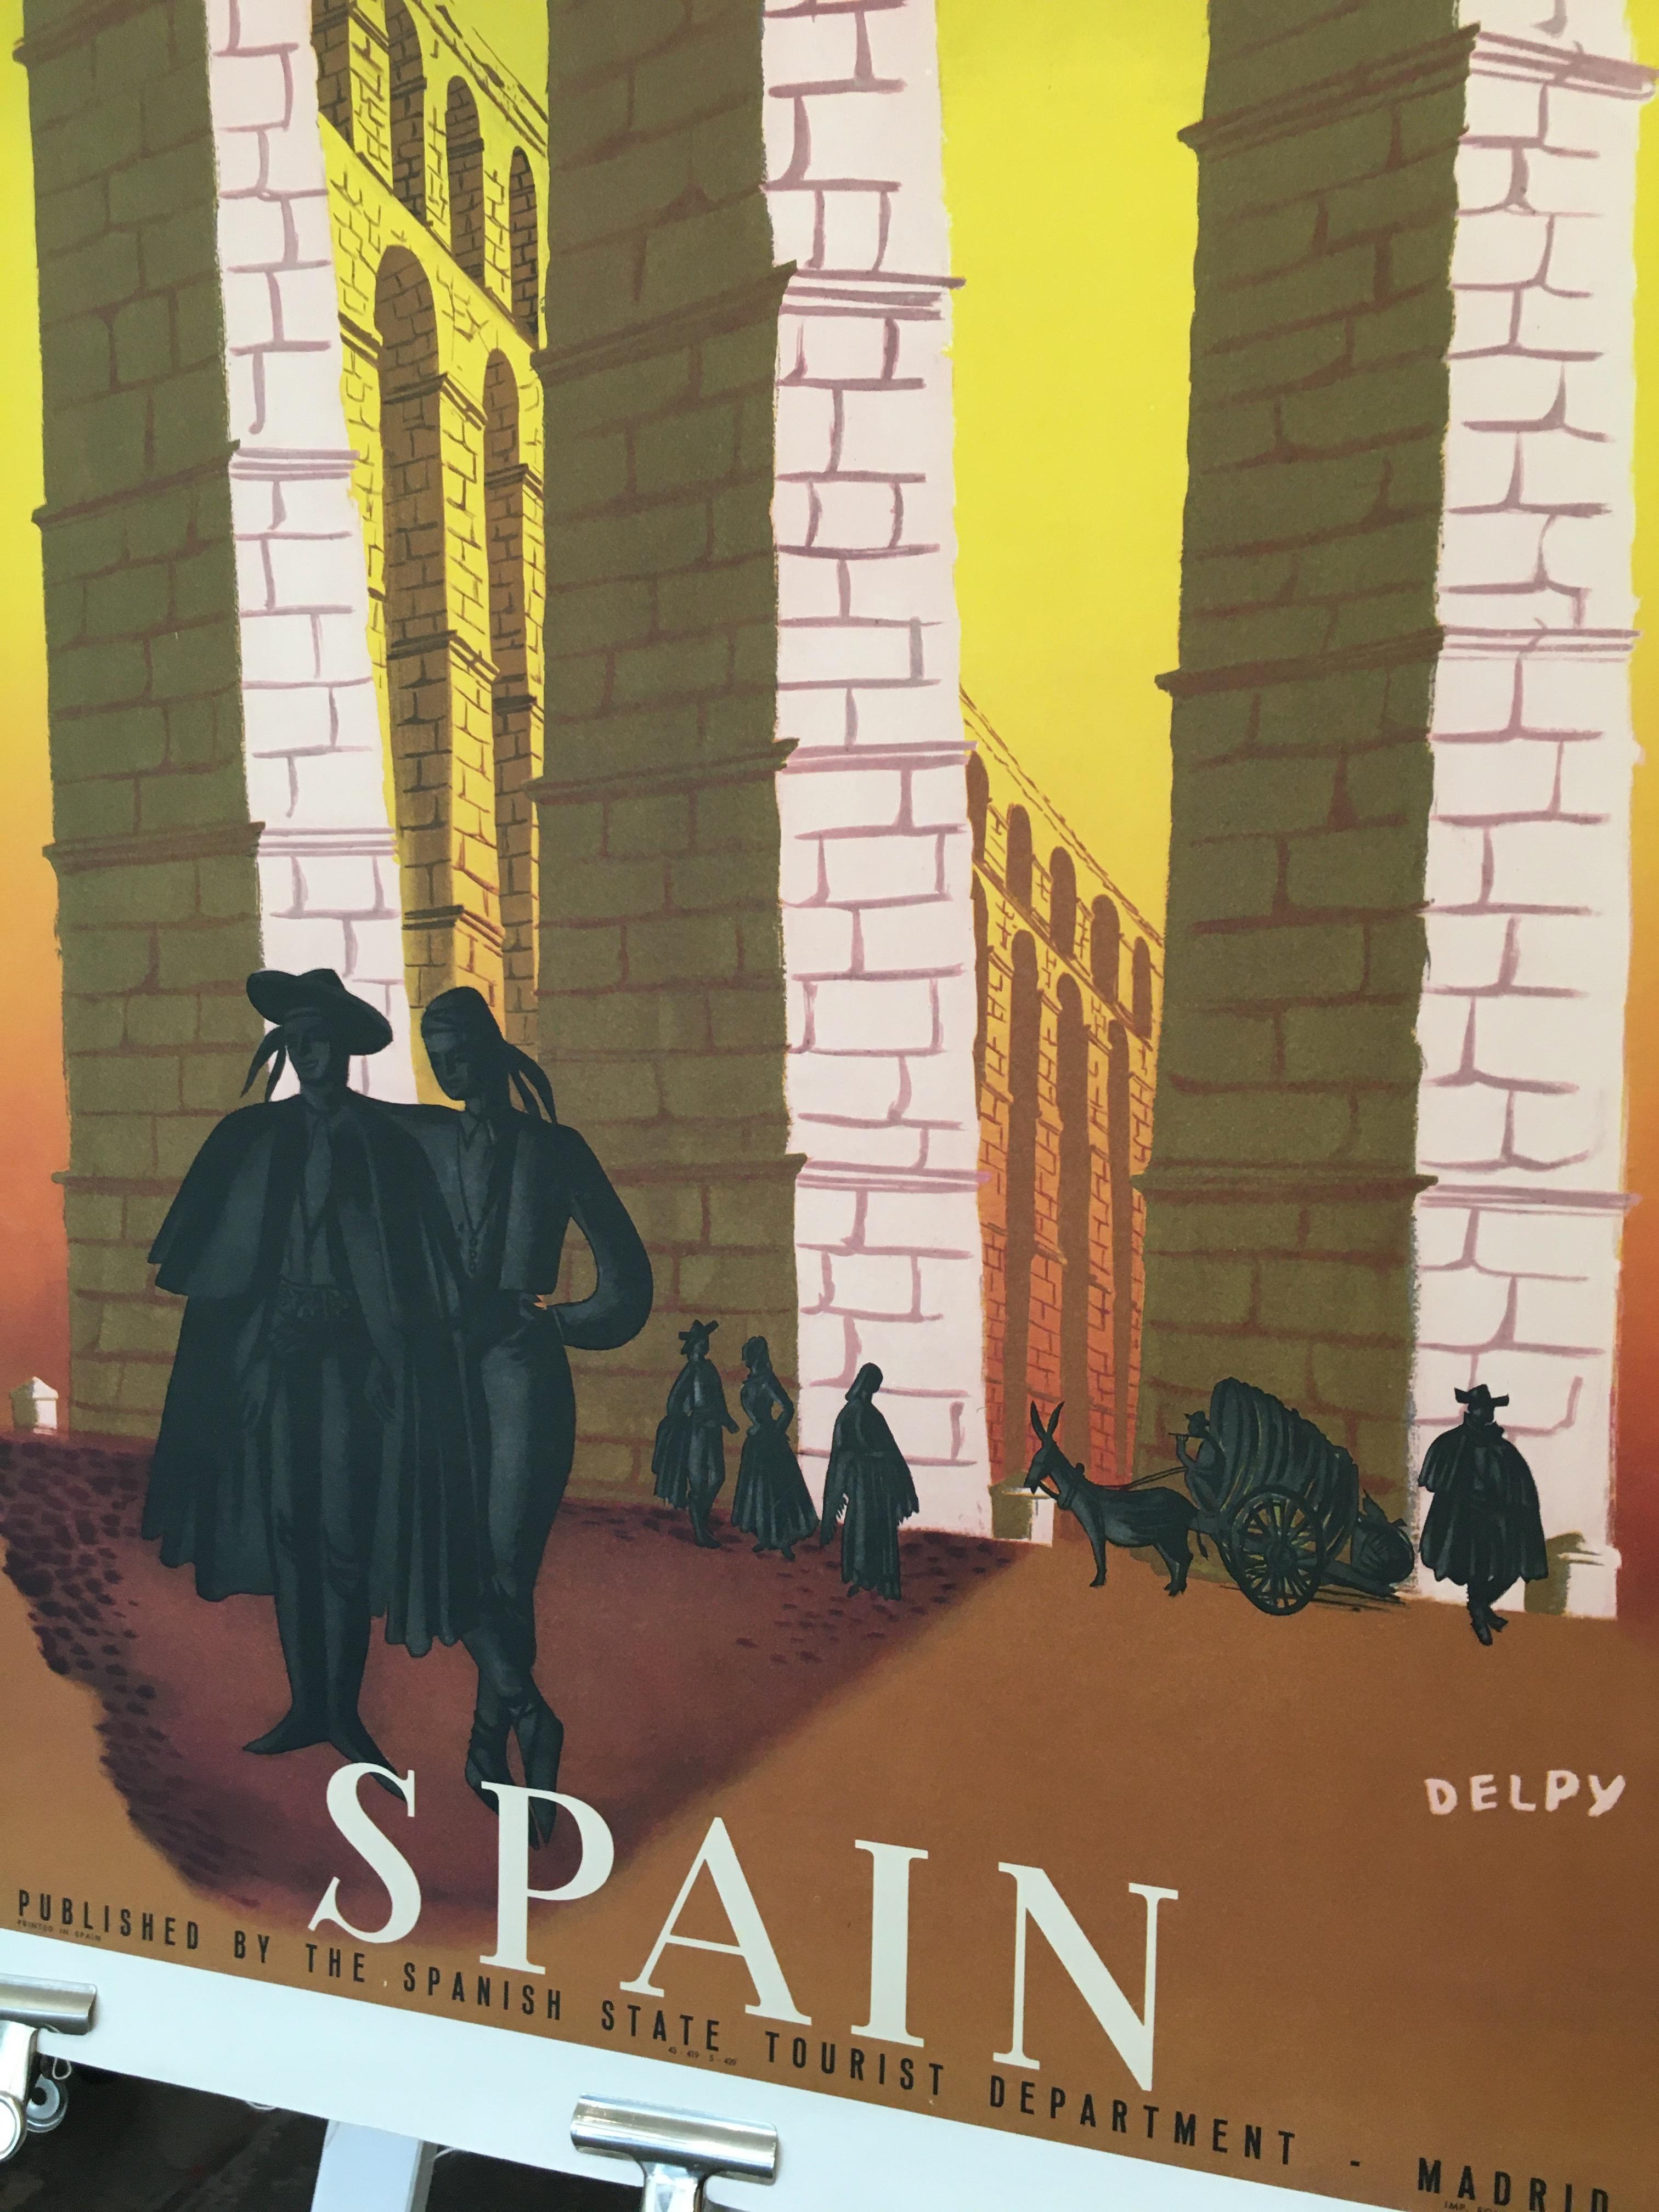 Art Deco 'Spain' Travel and Tourism Original Vintage Poster by Delpy, 1948